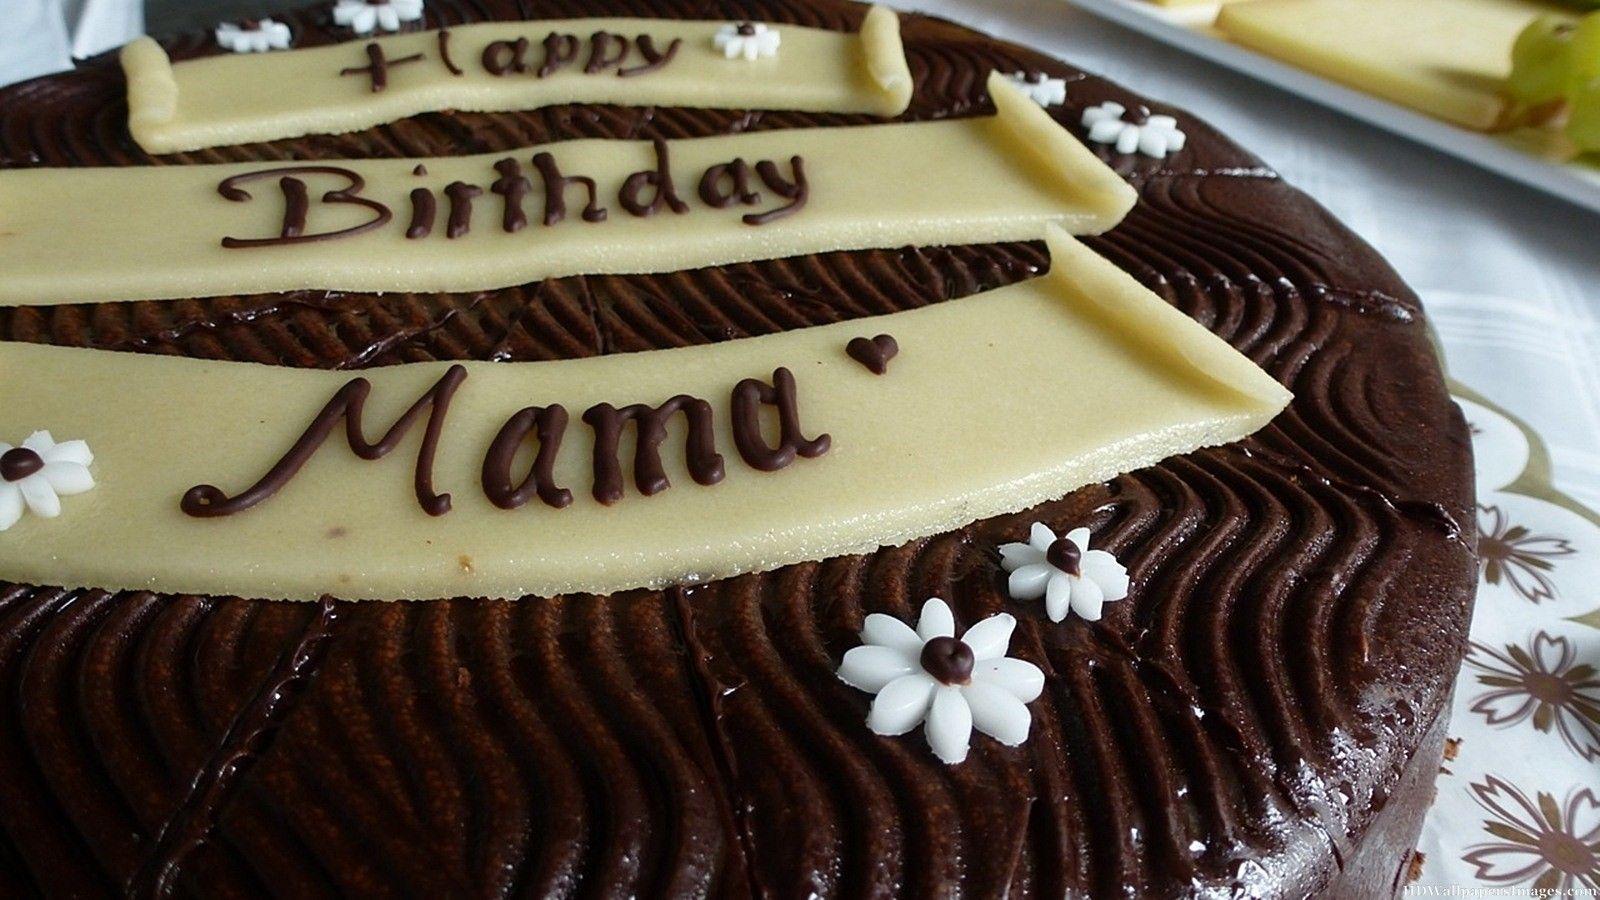 Name on birthday cake for mom